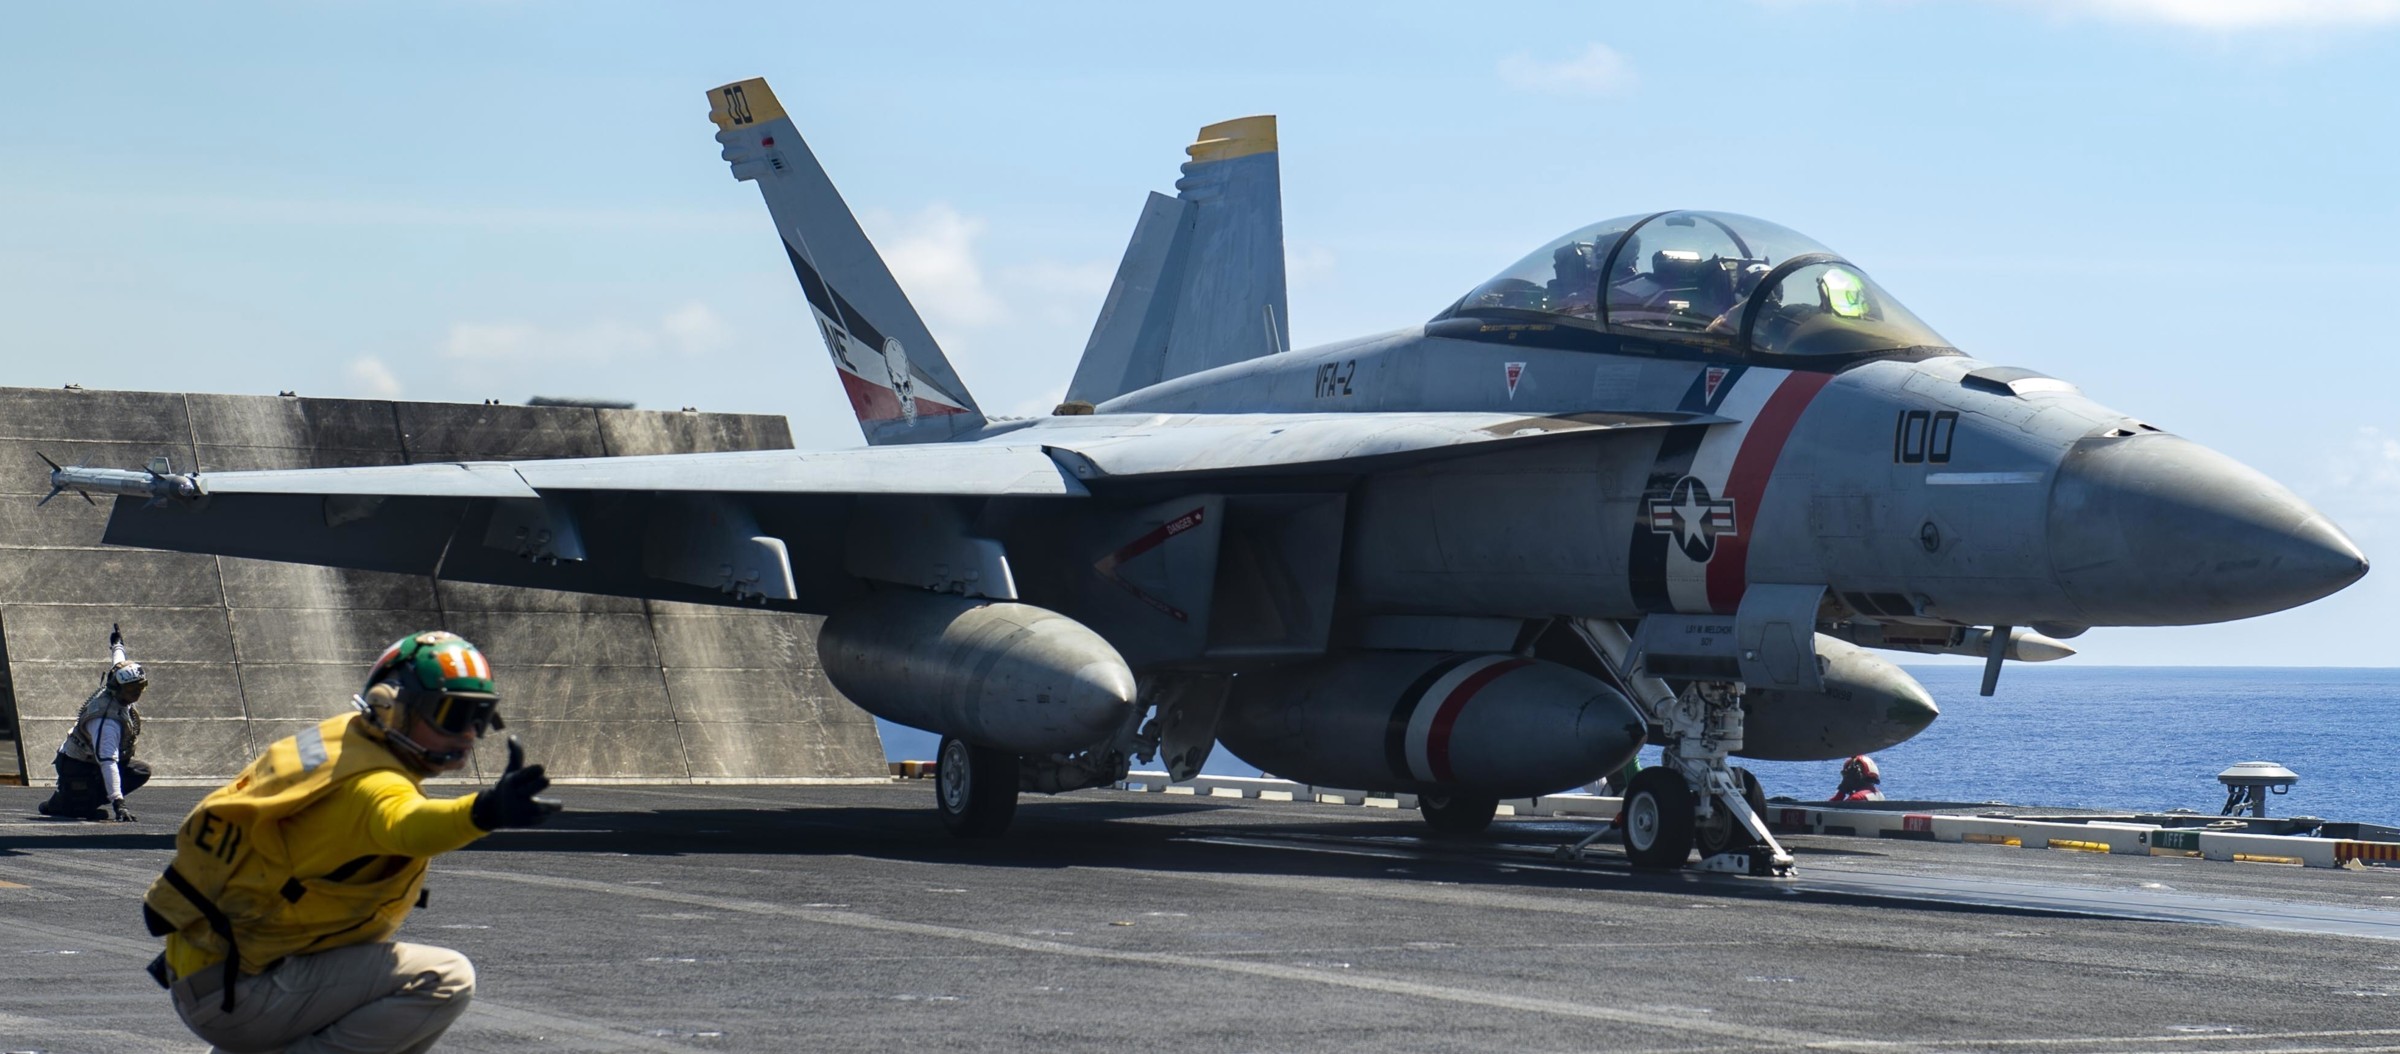 vfa-2 bounty hunters strike fighter squadron us navy f/a-18f super hornet carrier air wing cvw-2 uss carl vinson cvn-70 74